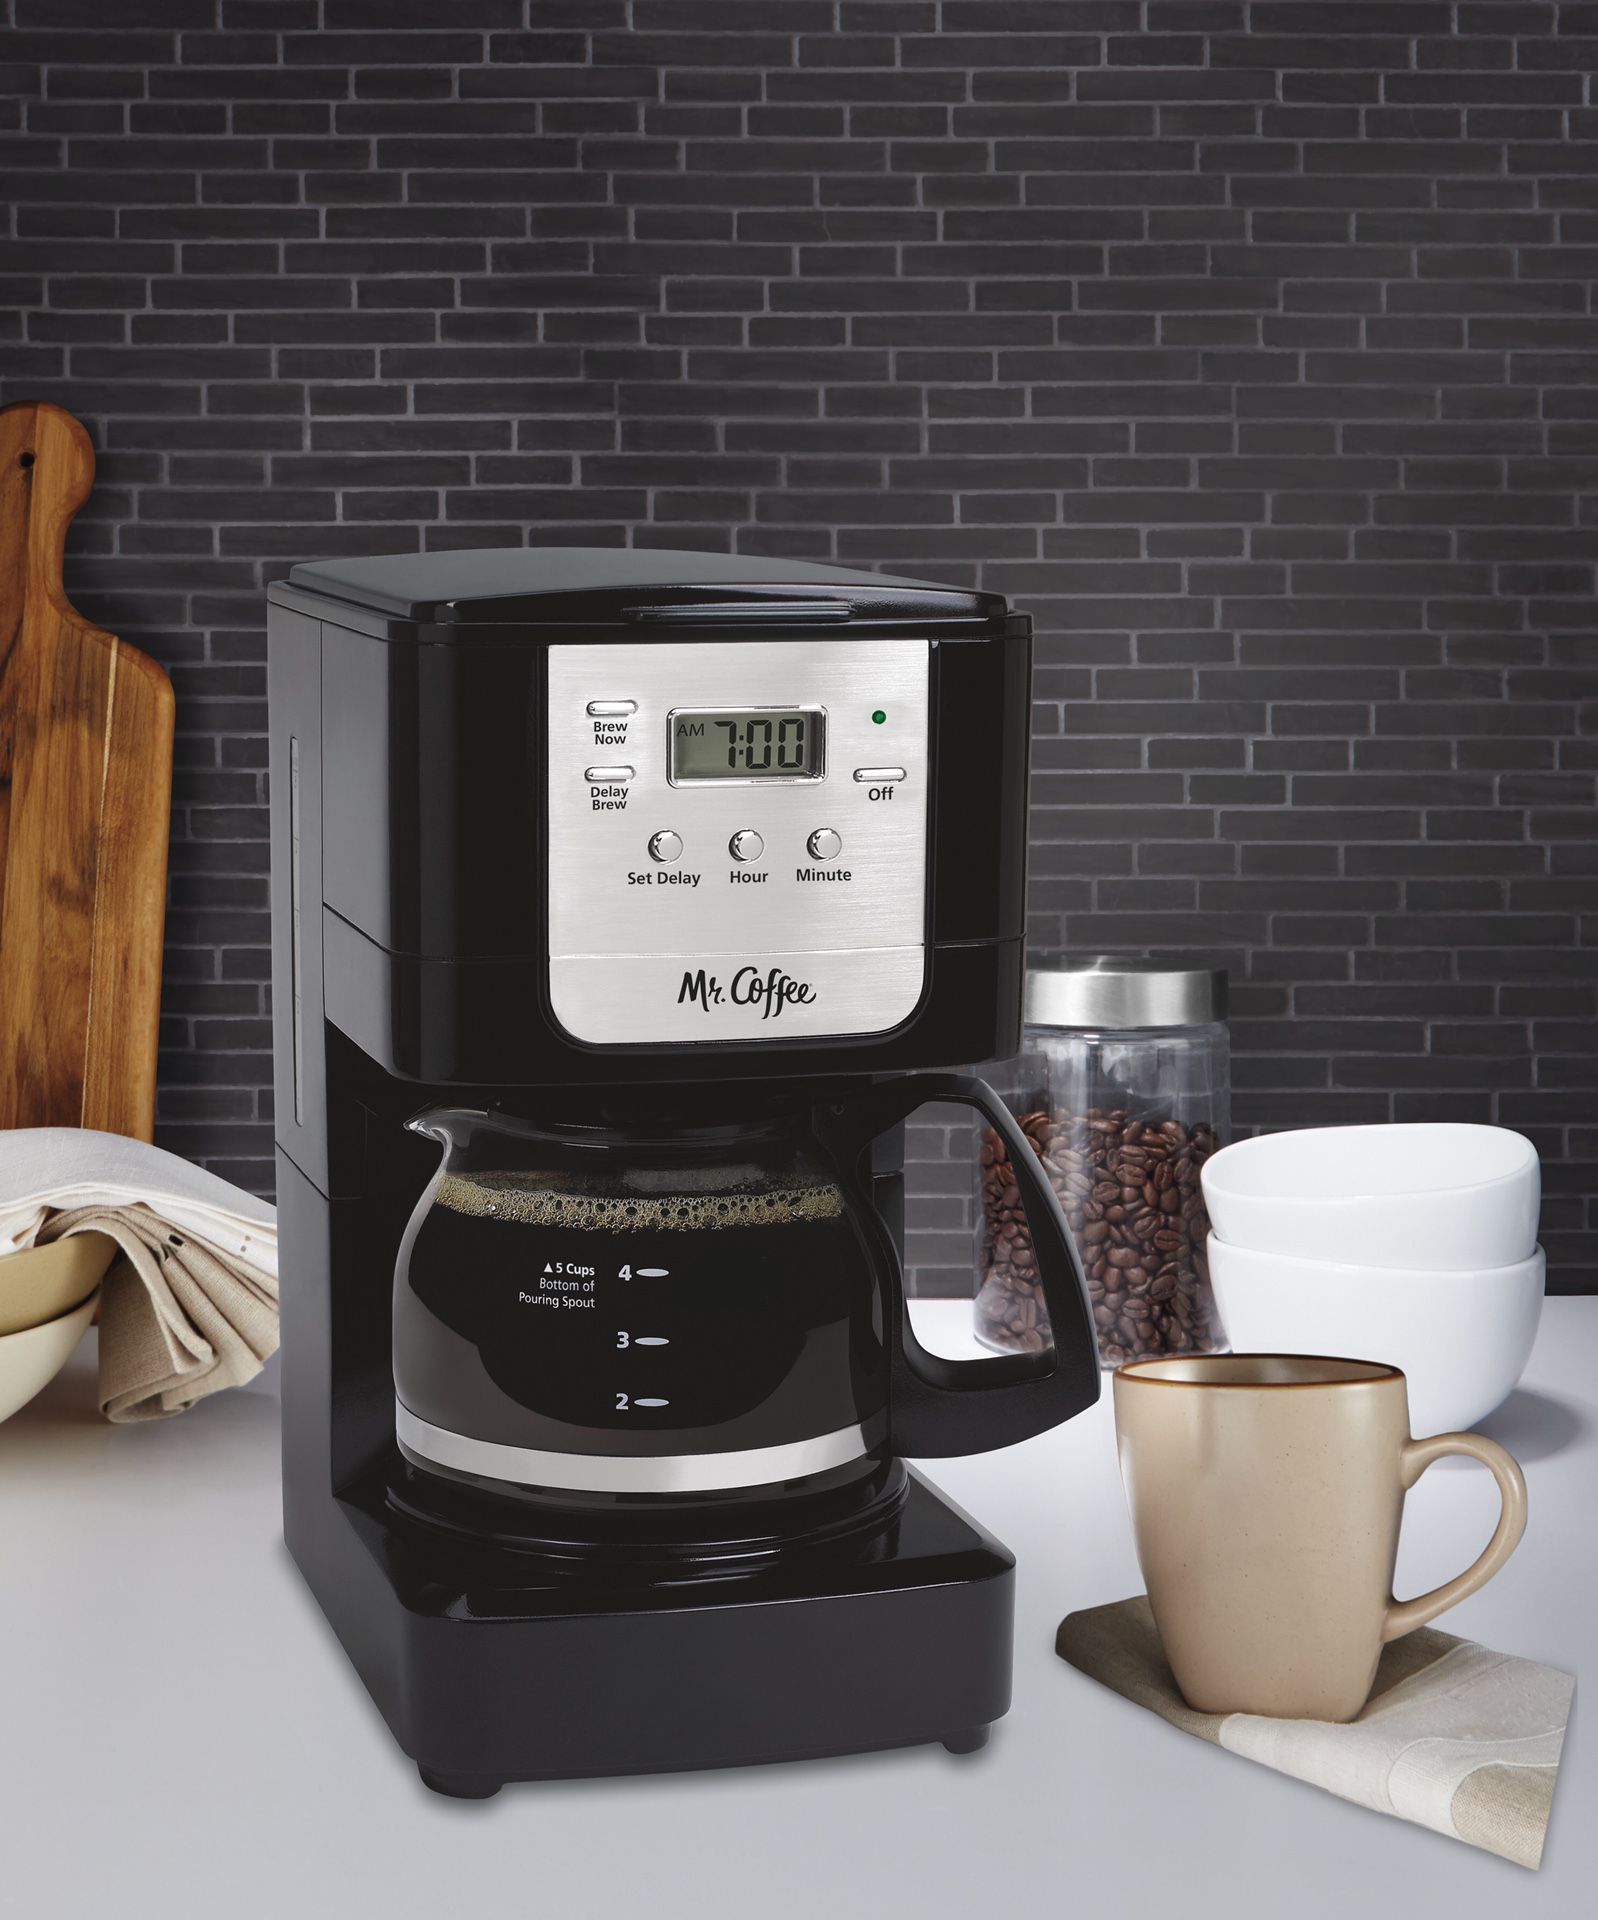 Mr. Coffee Advance Brew 5-Cup Coffee Maker